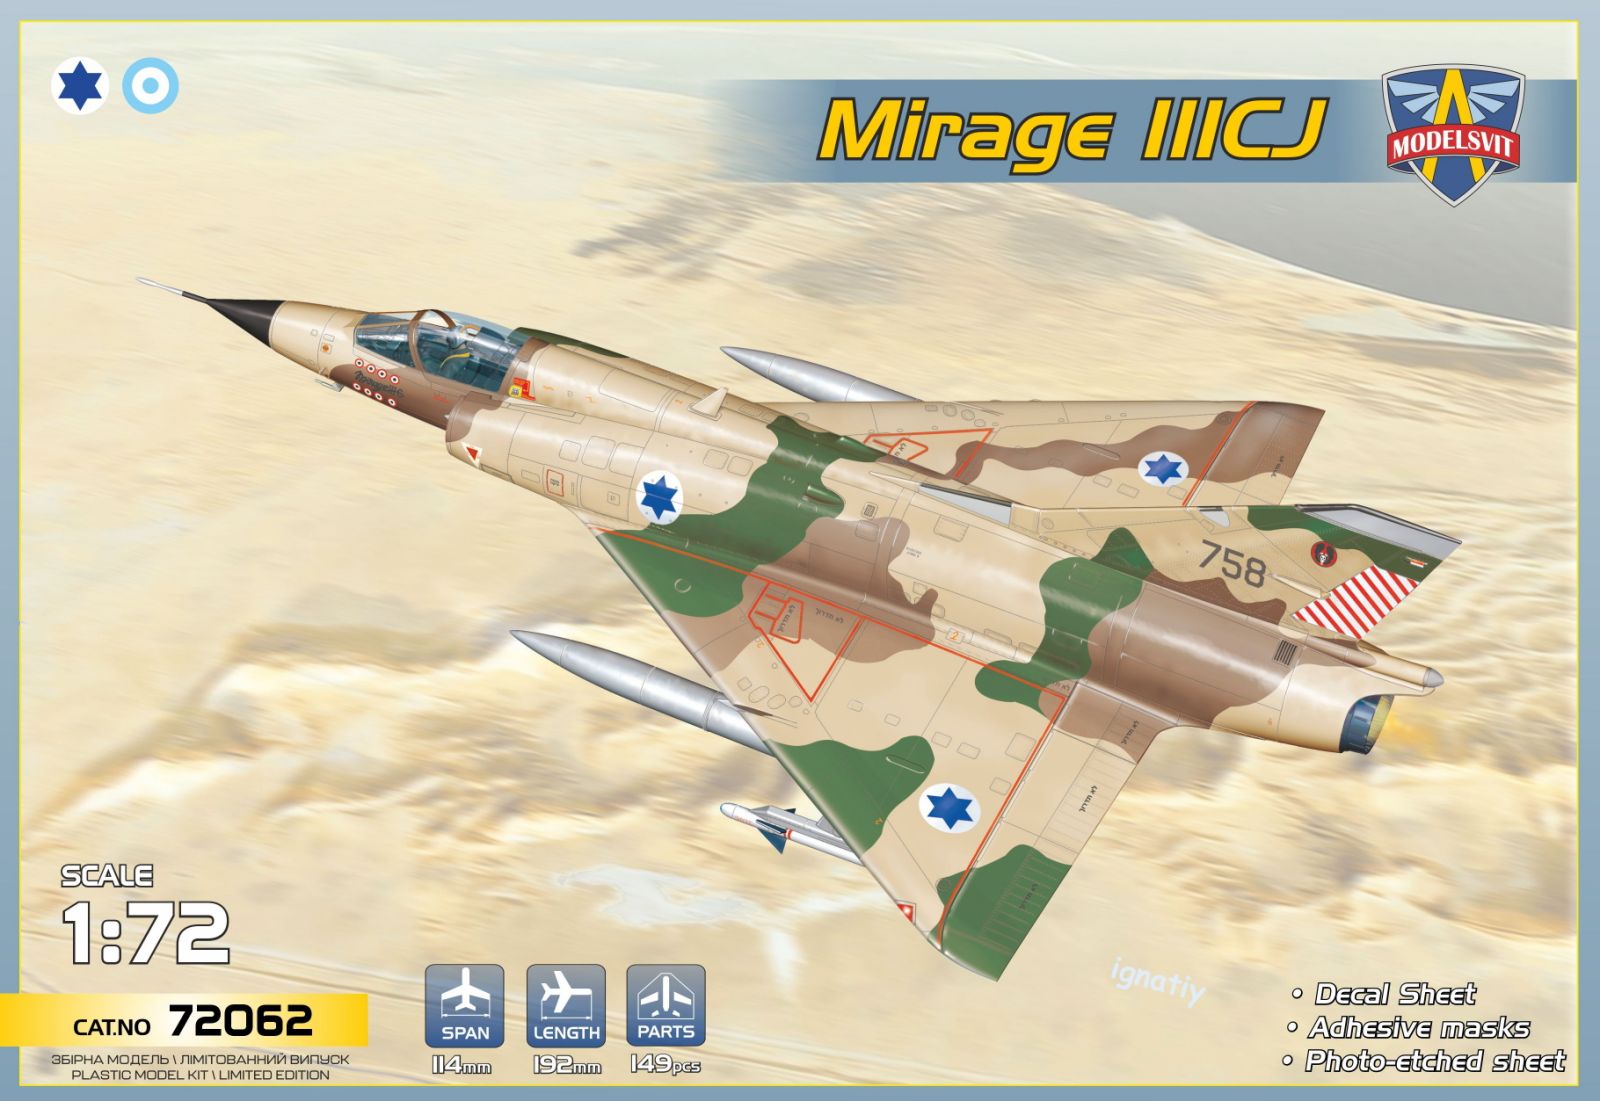 Model kit 1/72 Dassault Mirage IIICJ (Modelsvit)